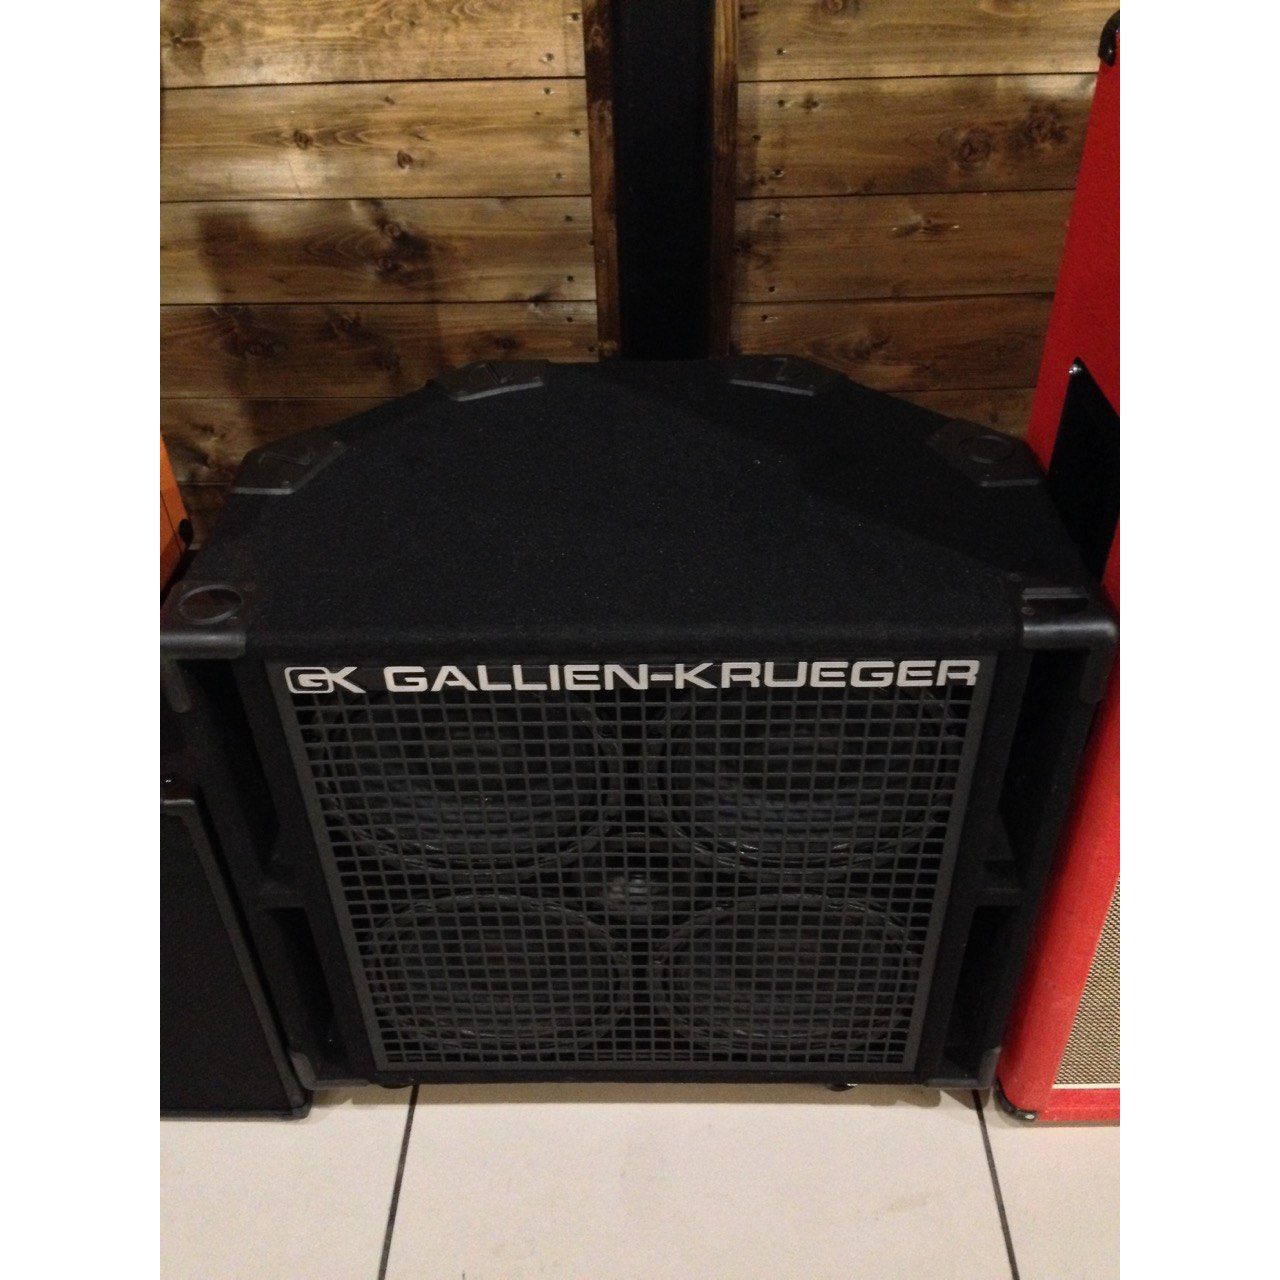 Gallien Krueger 410RBH 8ohm Оборудование гитарное